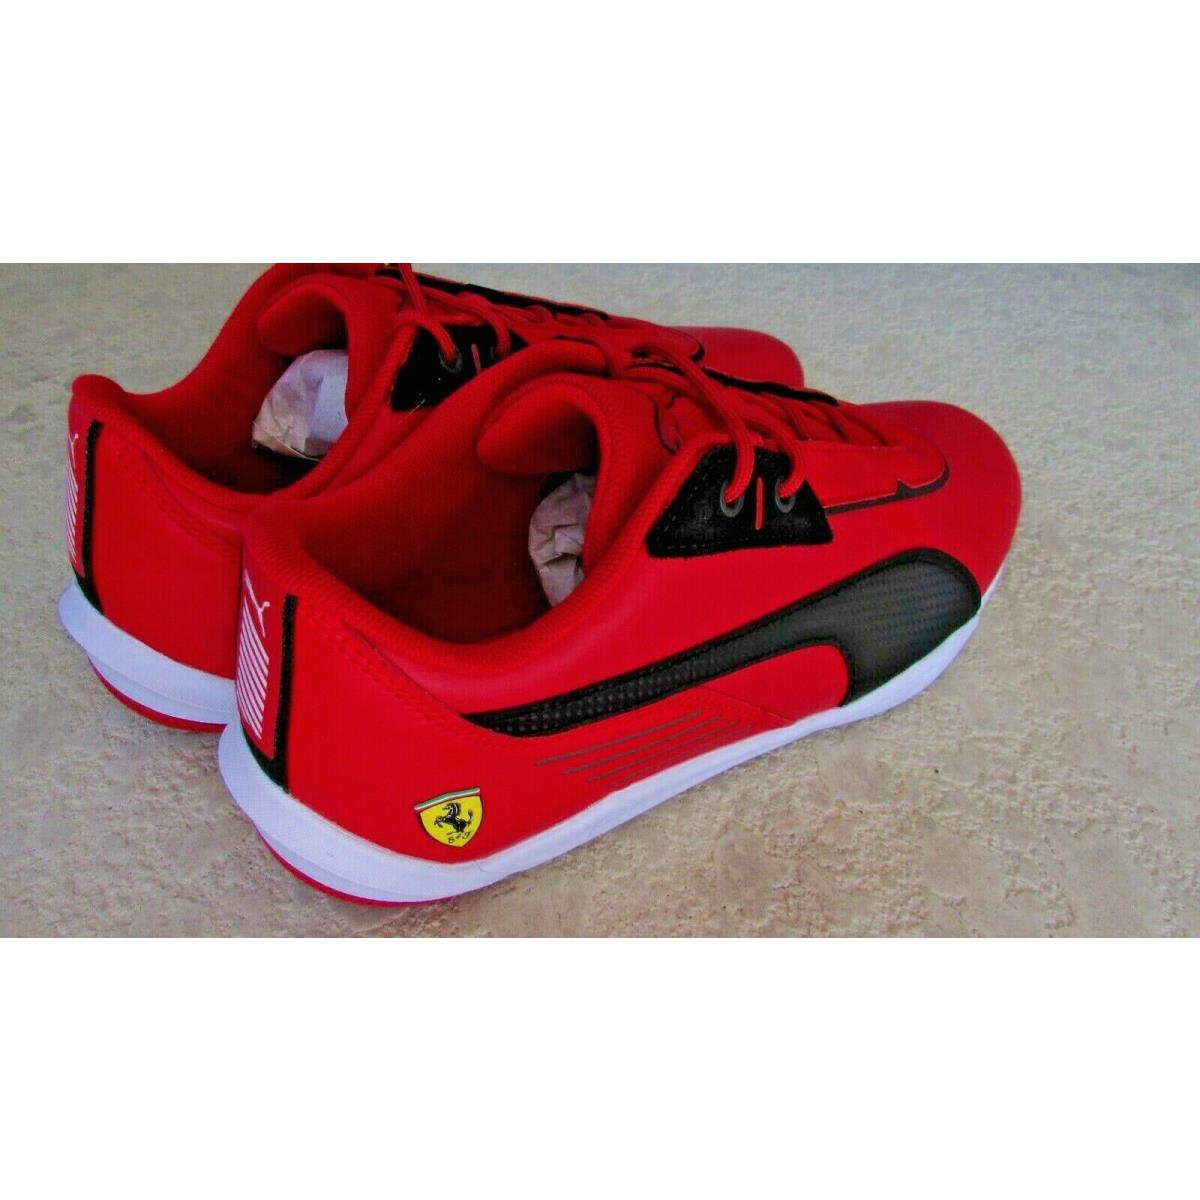 Puma shoes Driving Auto shoe - Ferrari Red 8